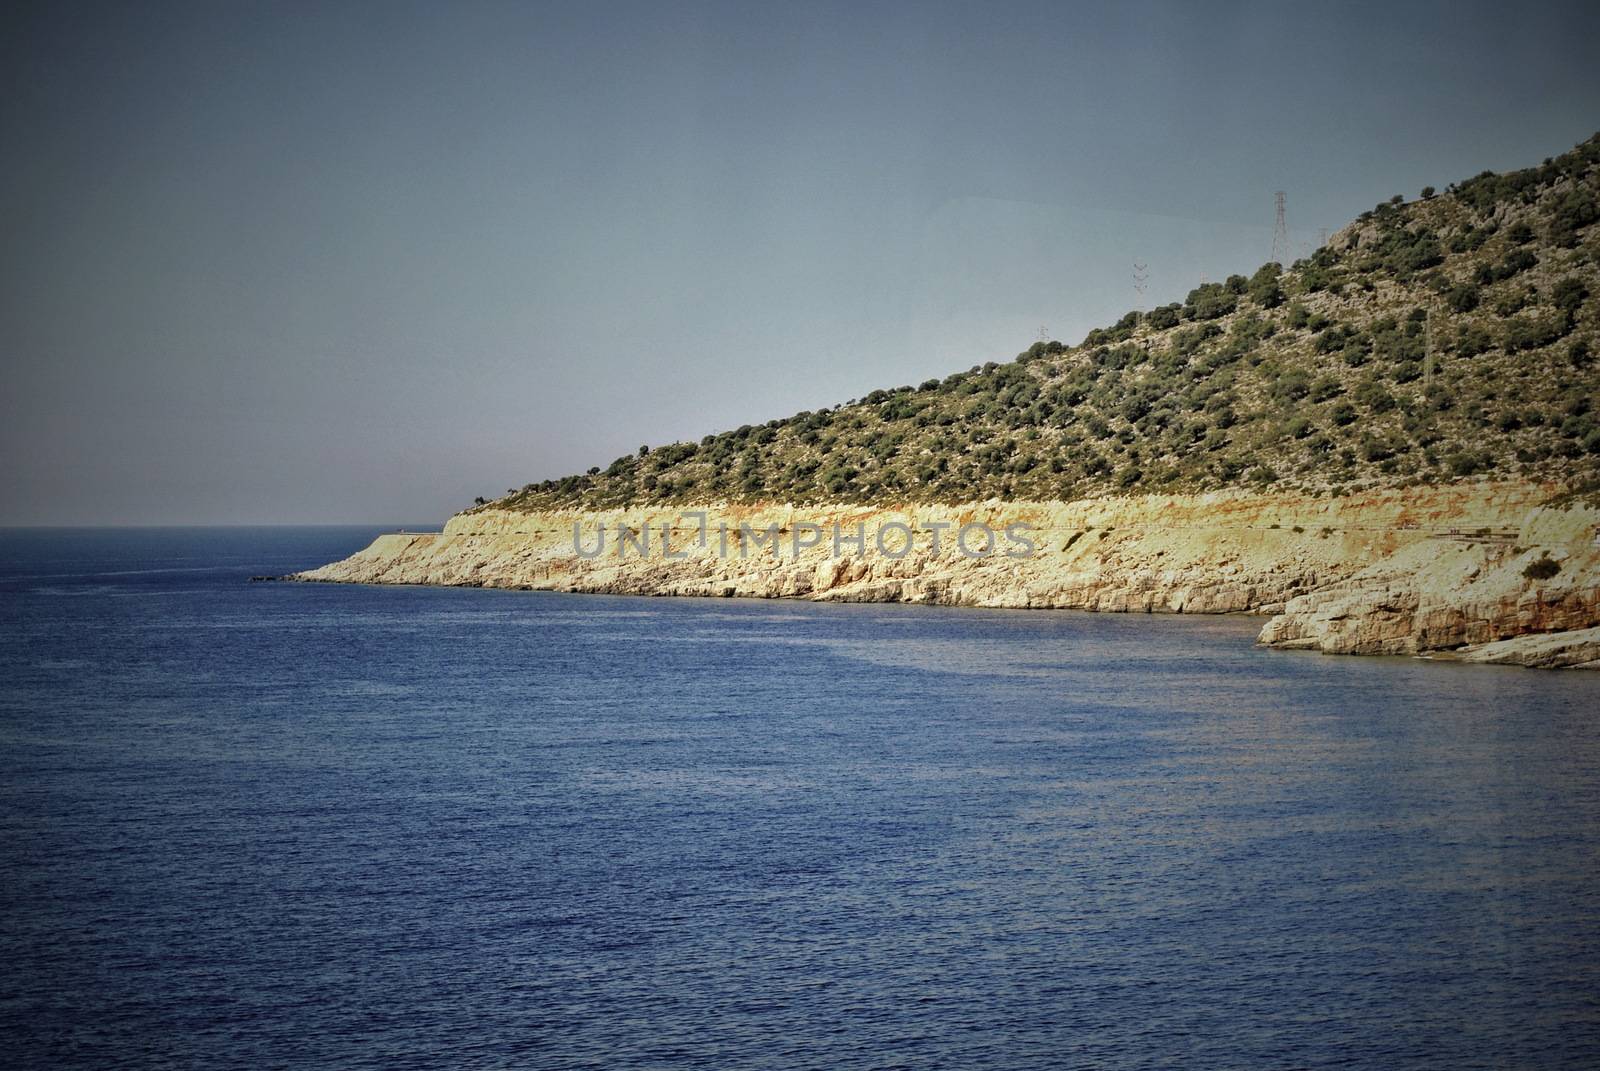 Rocky coast of the Mediterranean Sea in Turkey by DaVidich